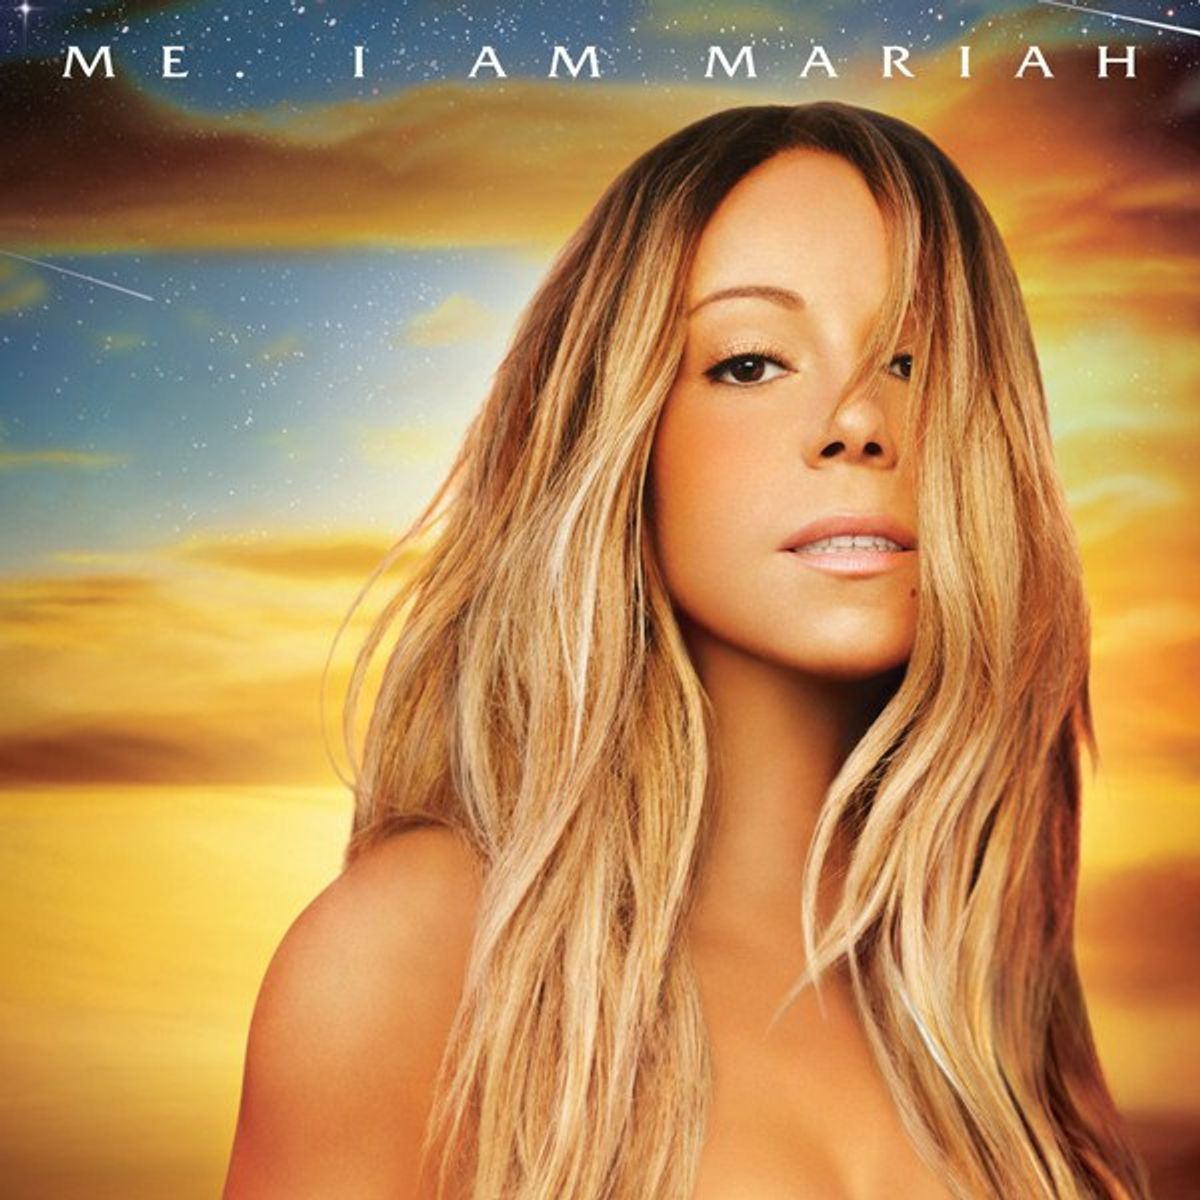 Fallen Star: An Analysis Of Mariah Carey's Most Unforgettable Performance